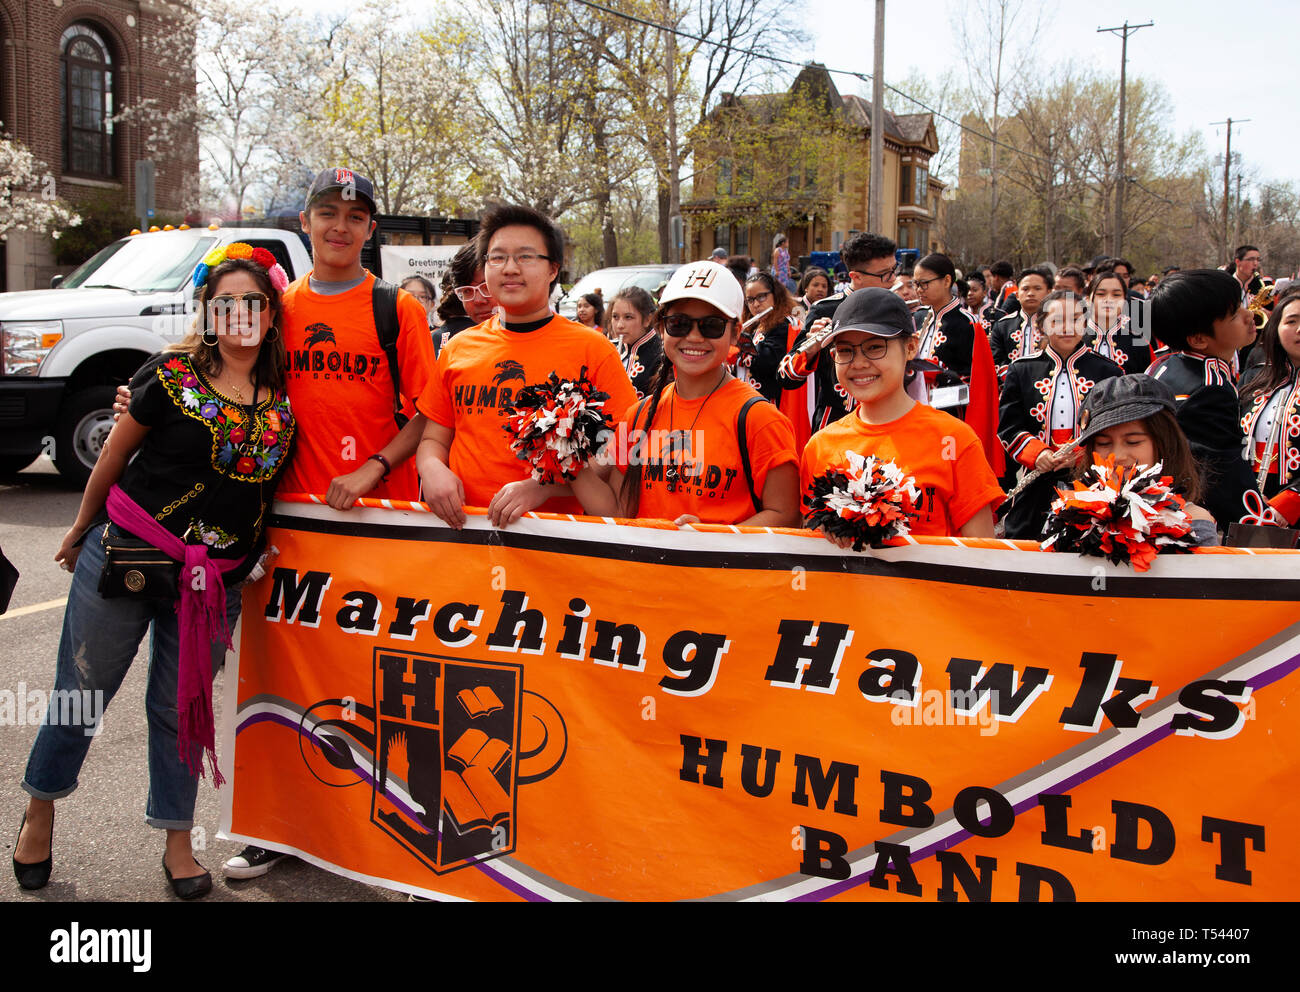 Gruppe Teens aus dem Marschieren Falken Humboldt Band im Cinco de Mayo Parade teilnehmen. St. Paul Minnesota MN USA Stockfoto